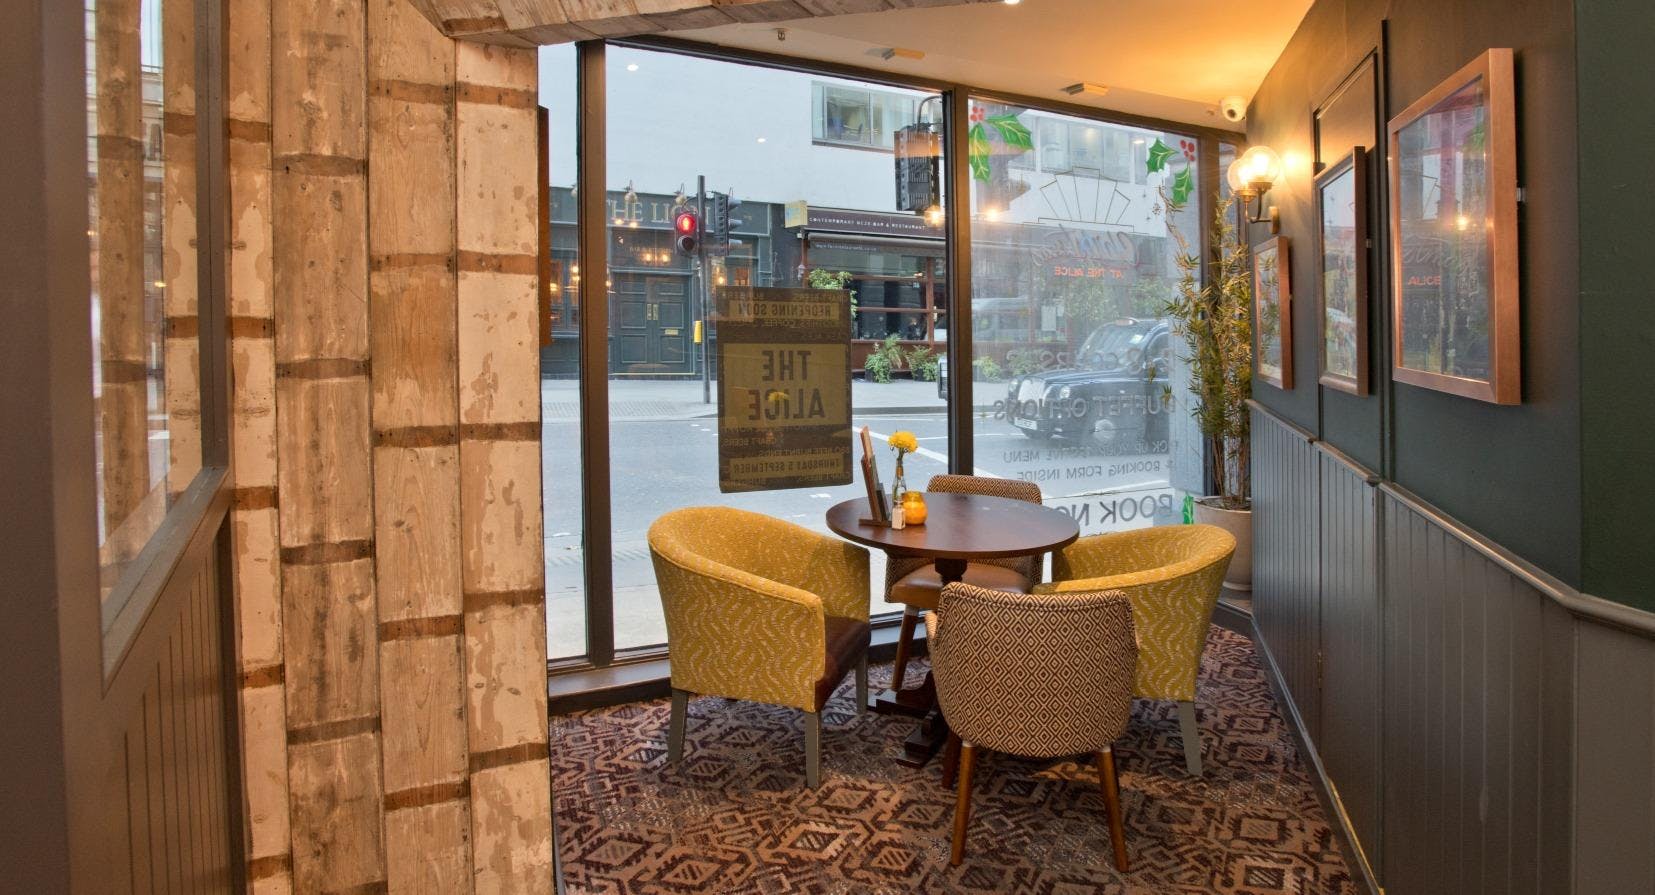 Photo of restaurant The Alice in Aldgate, London